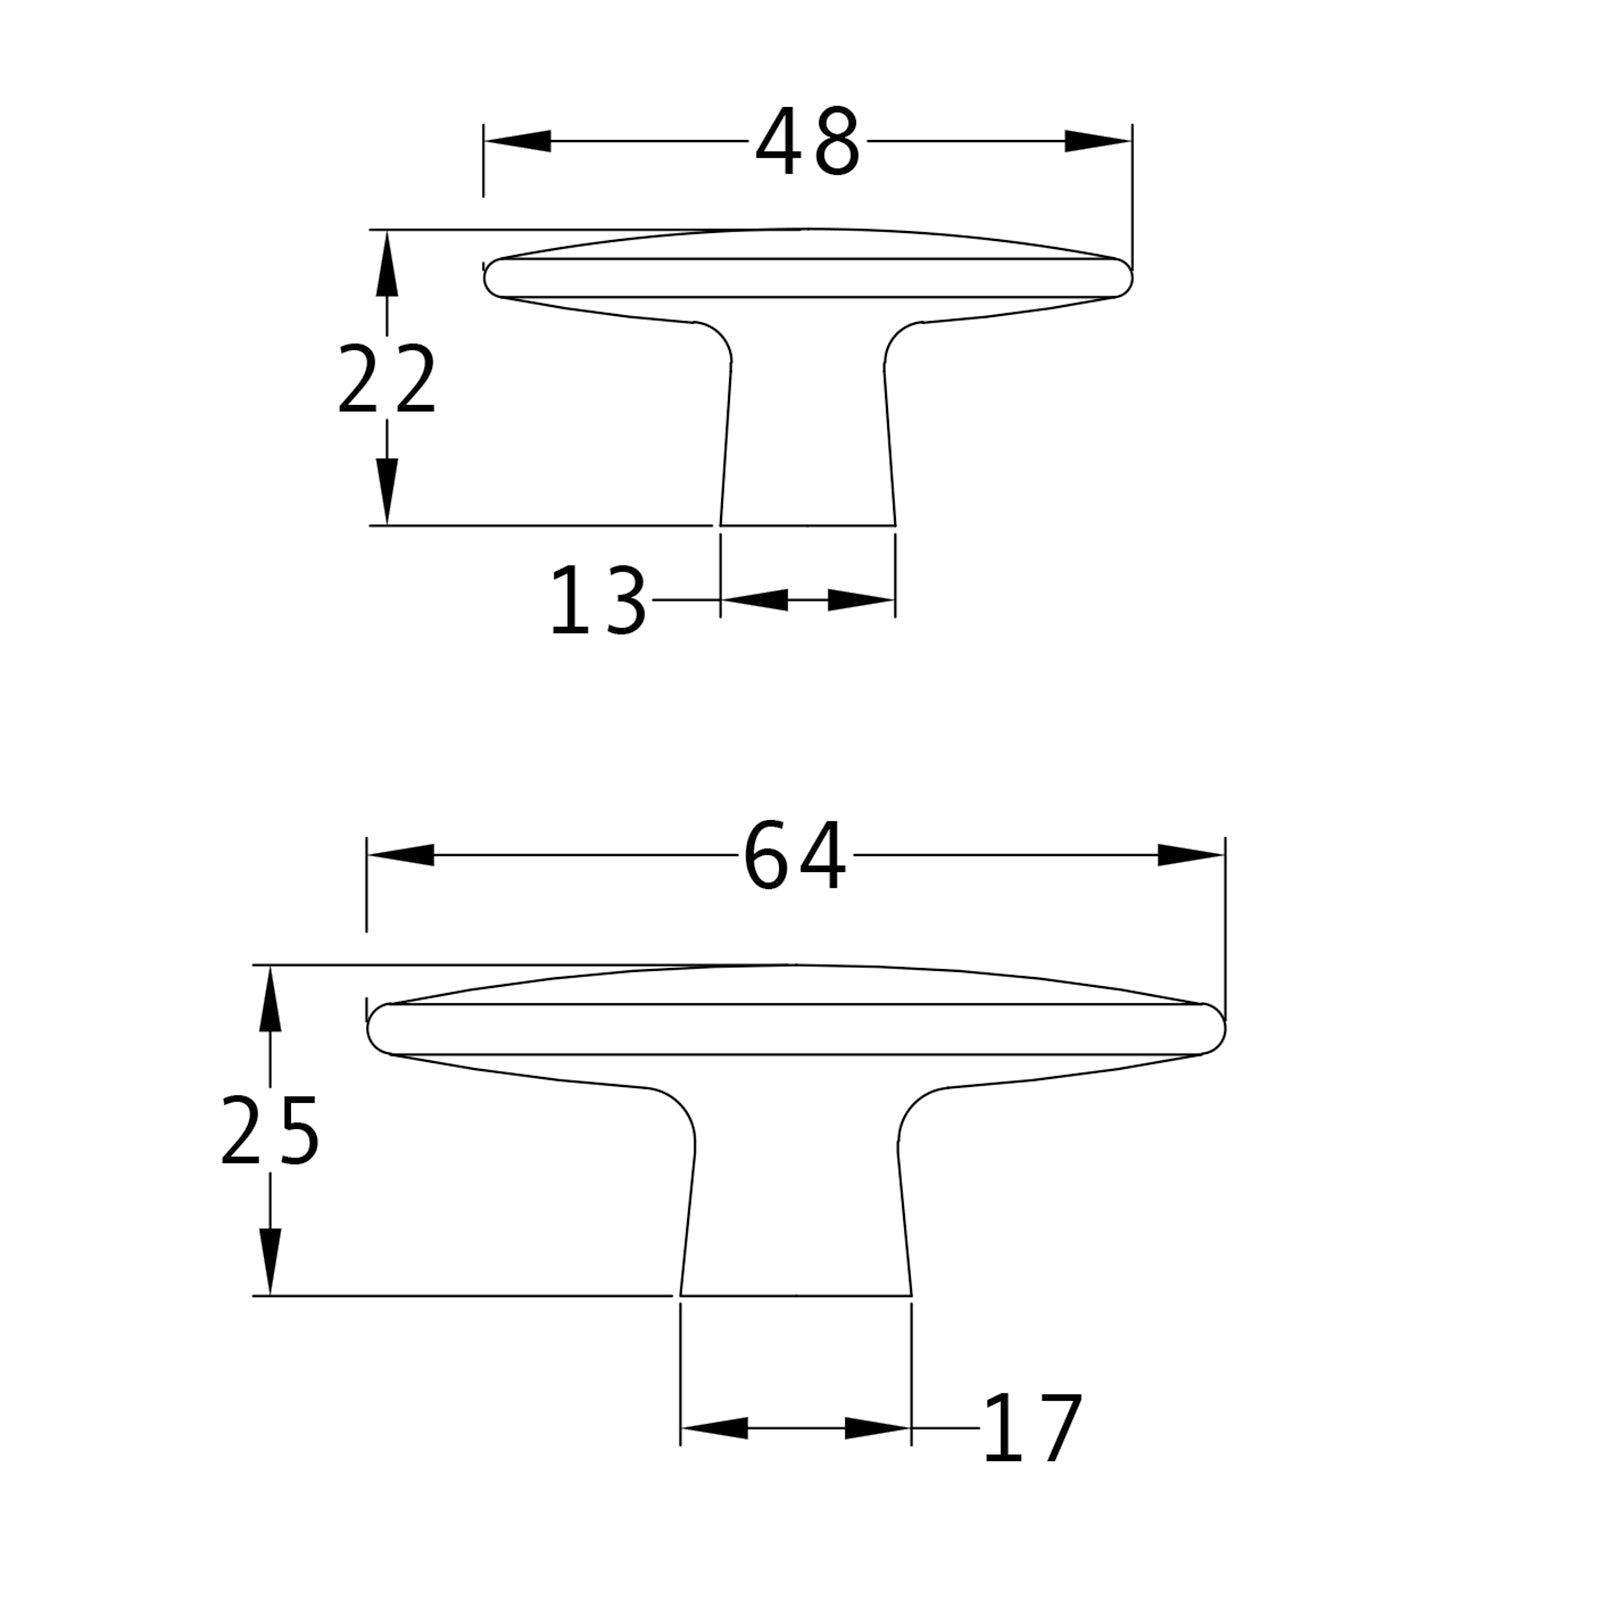 SHOW Technical drawing of Mushroom Cabinet Knob